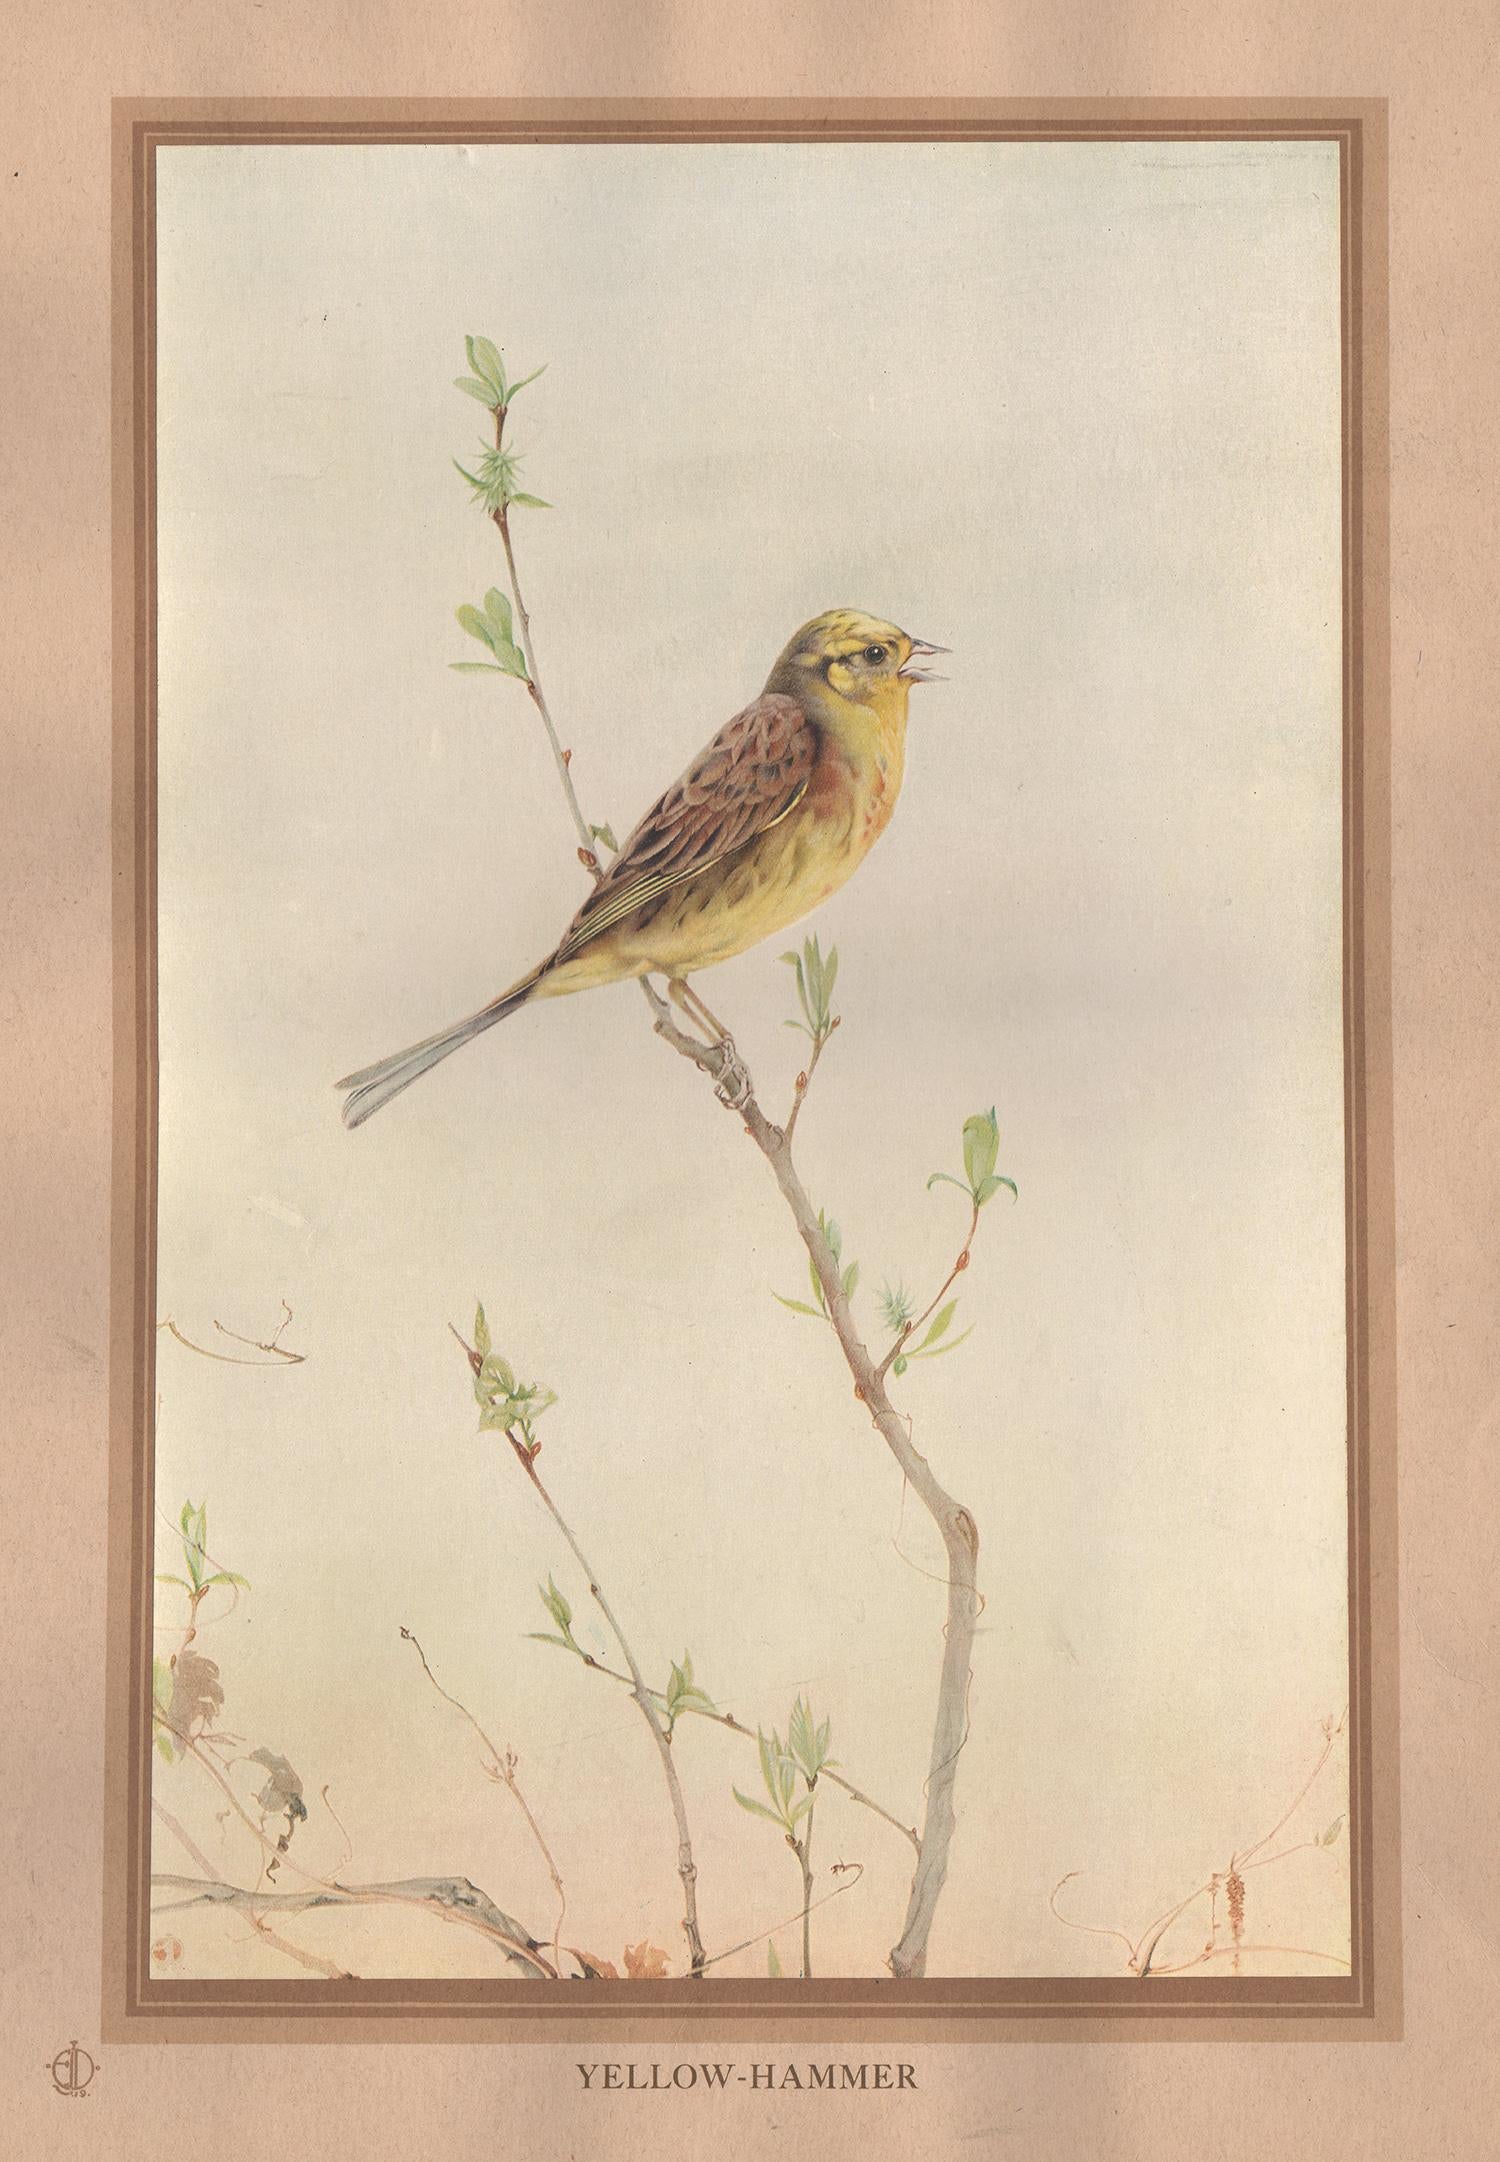 After Edward Detmold Animal Print - 'Yellow-Hammer', English bird print after Edward Detmold, circa 1919